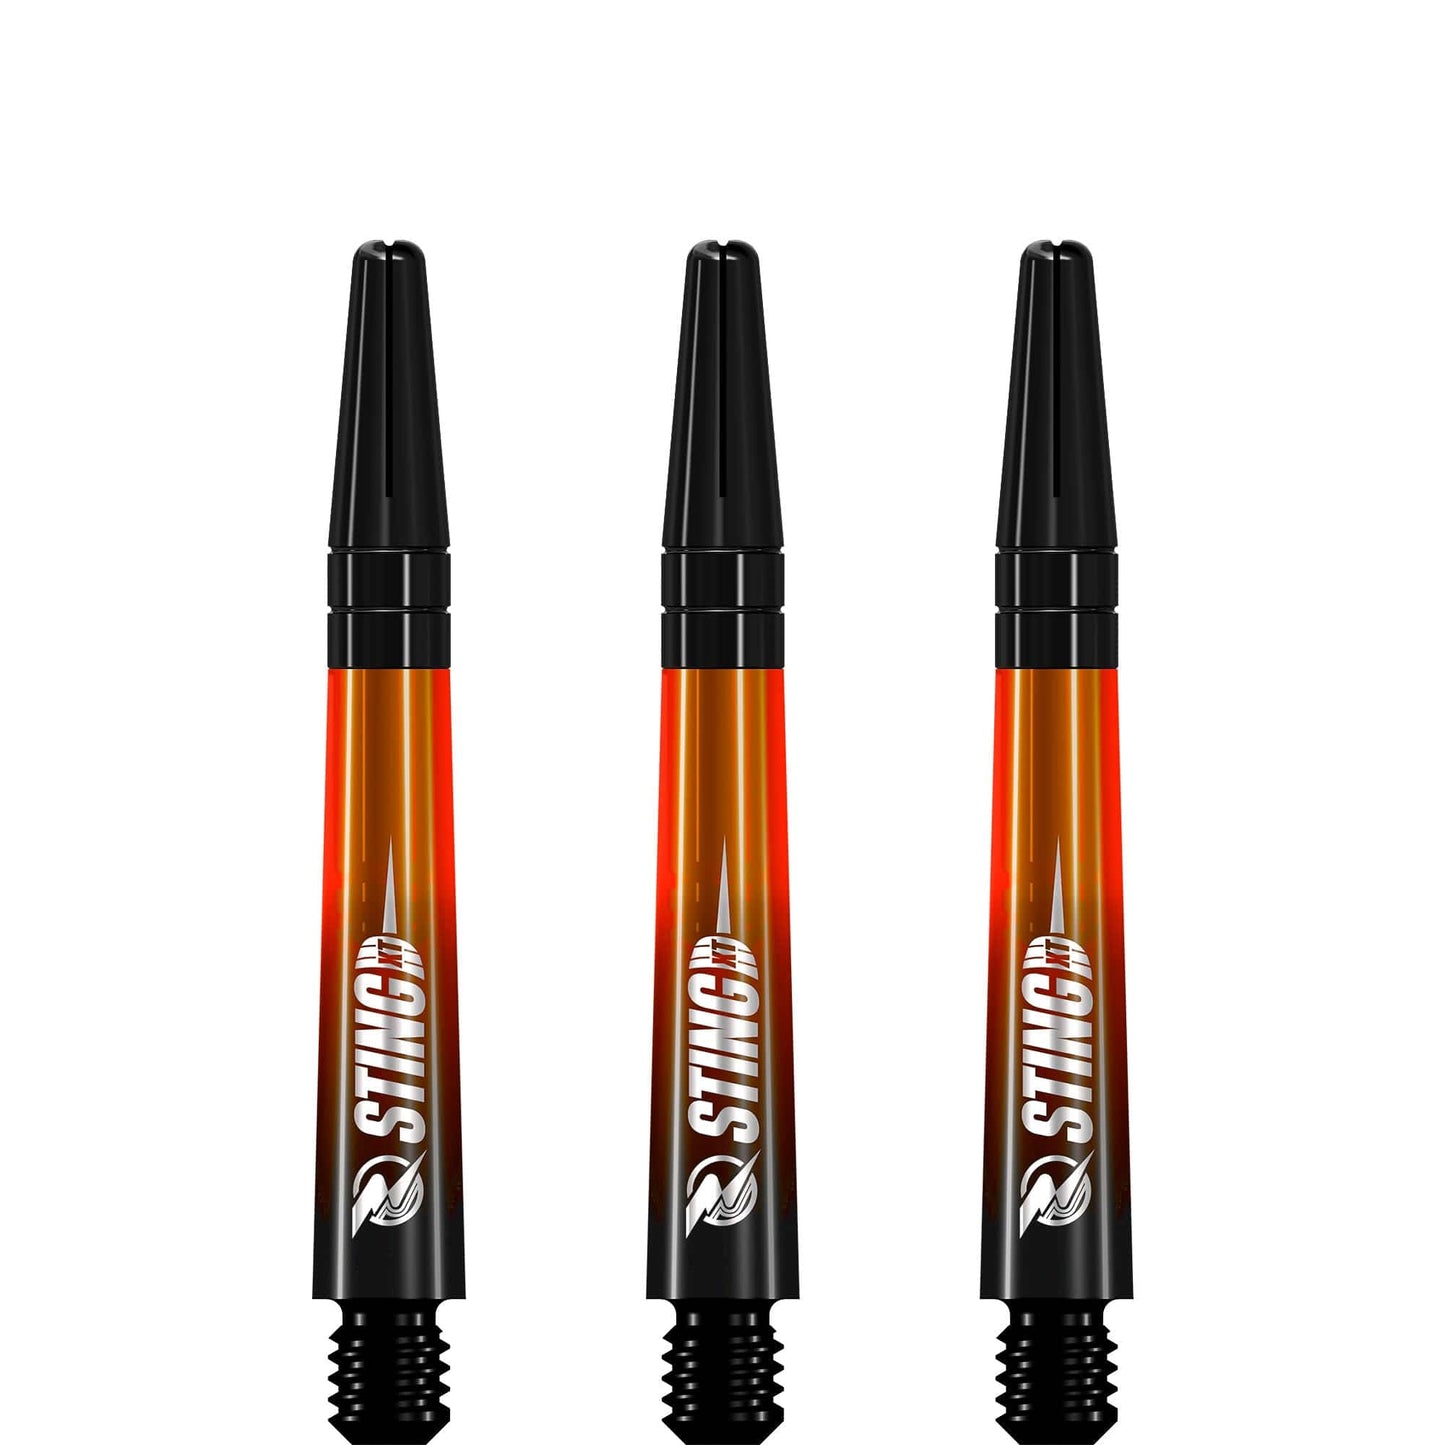 Ruthless Sting XT Dart Shafts - Polycarbonate - Gradient Black & Orange - Black Top Tweenie